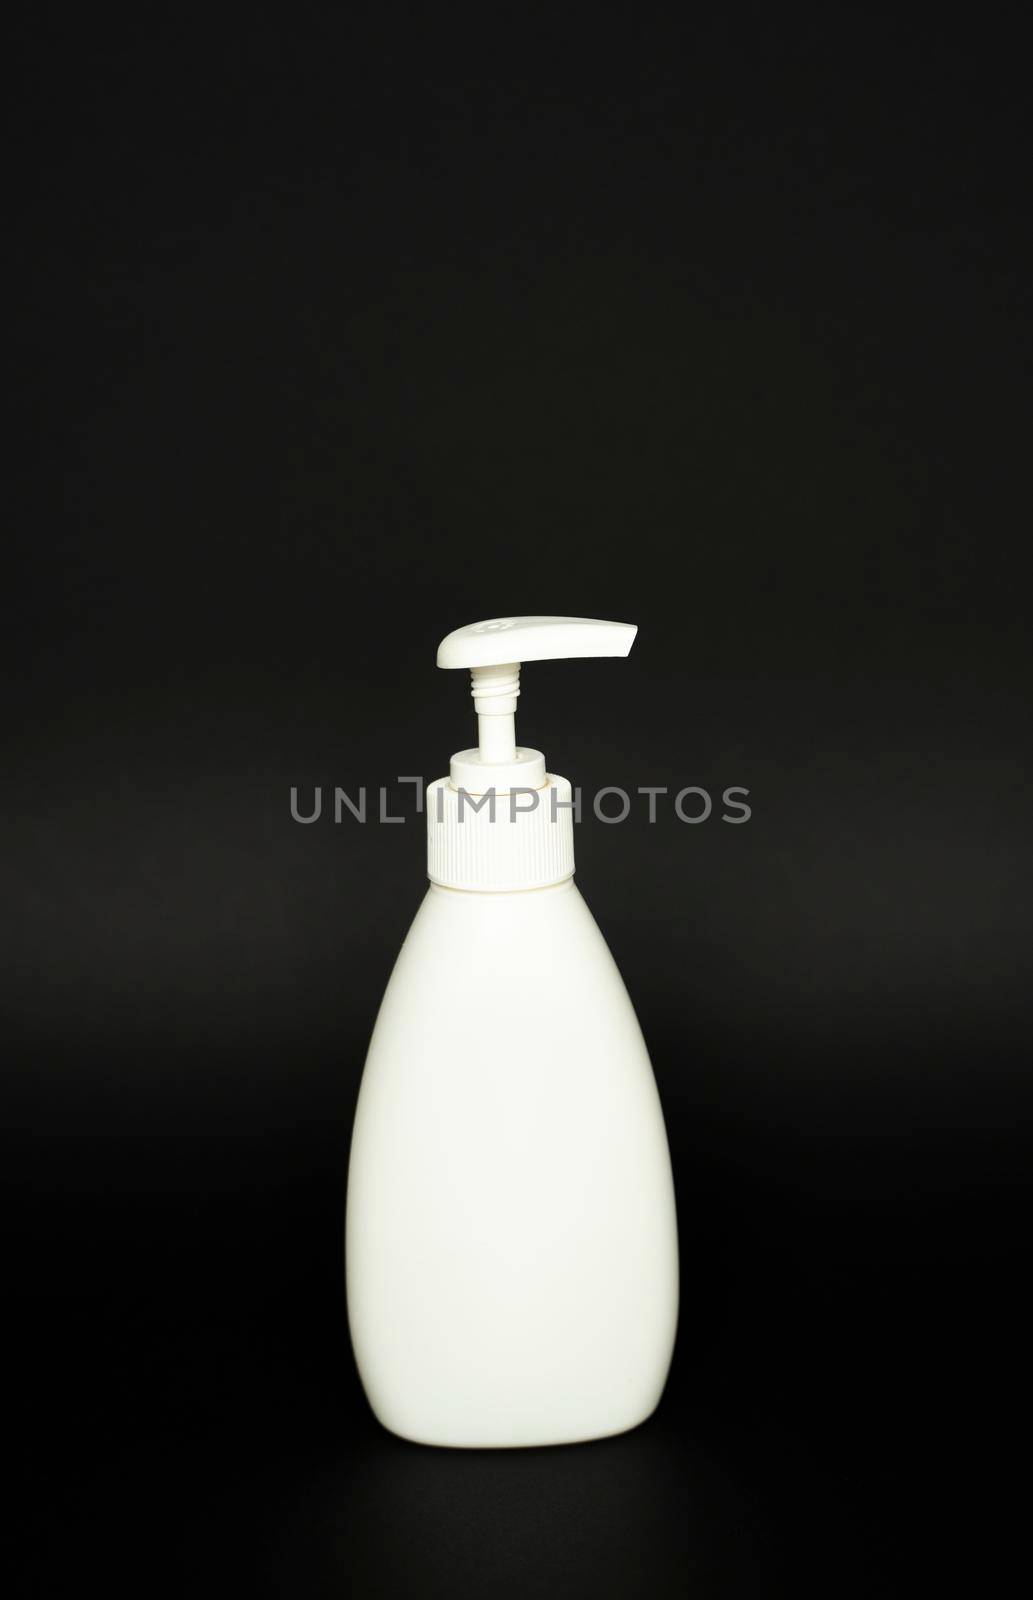 White plastic bottle used for shampoo or soap on black background.. Mock up template for design. by vovsht